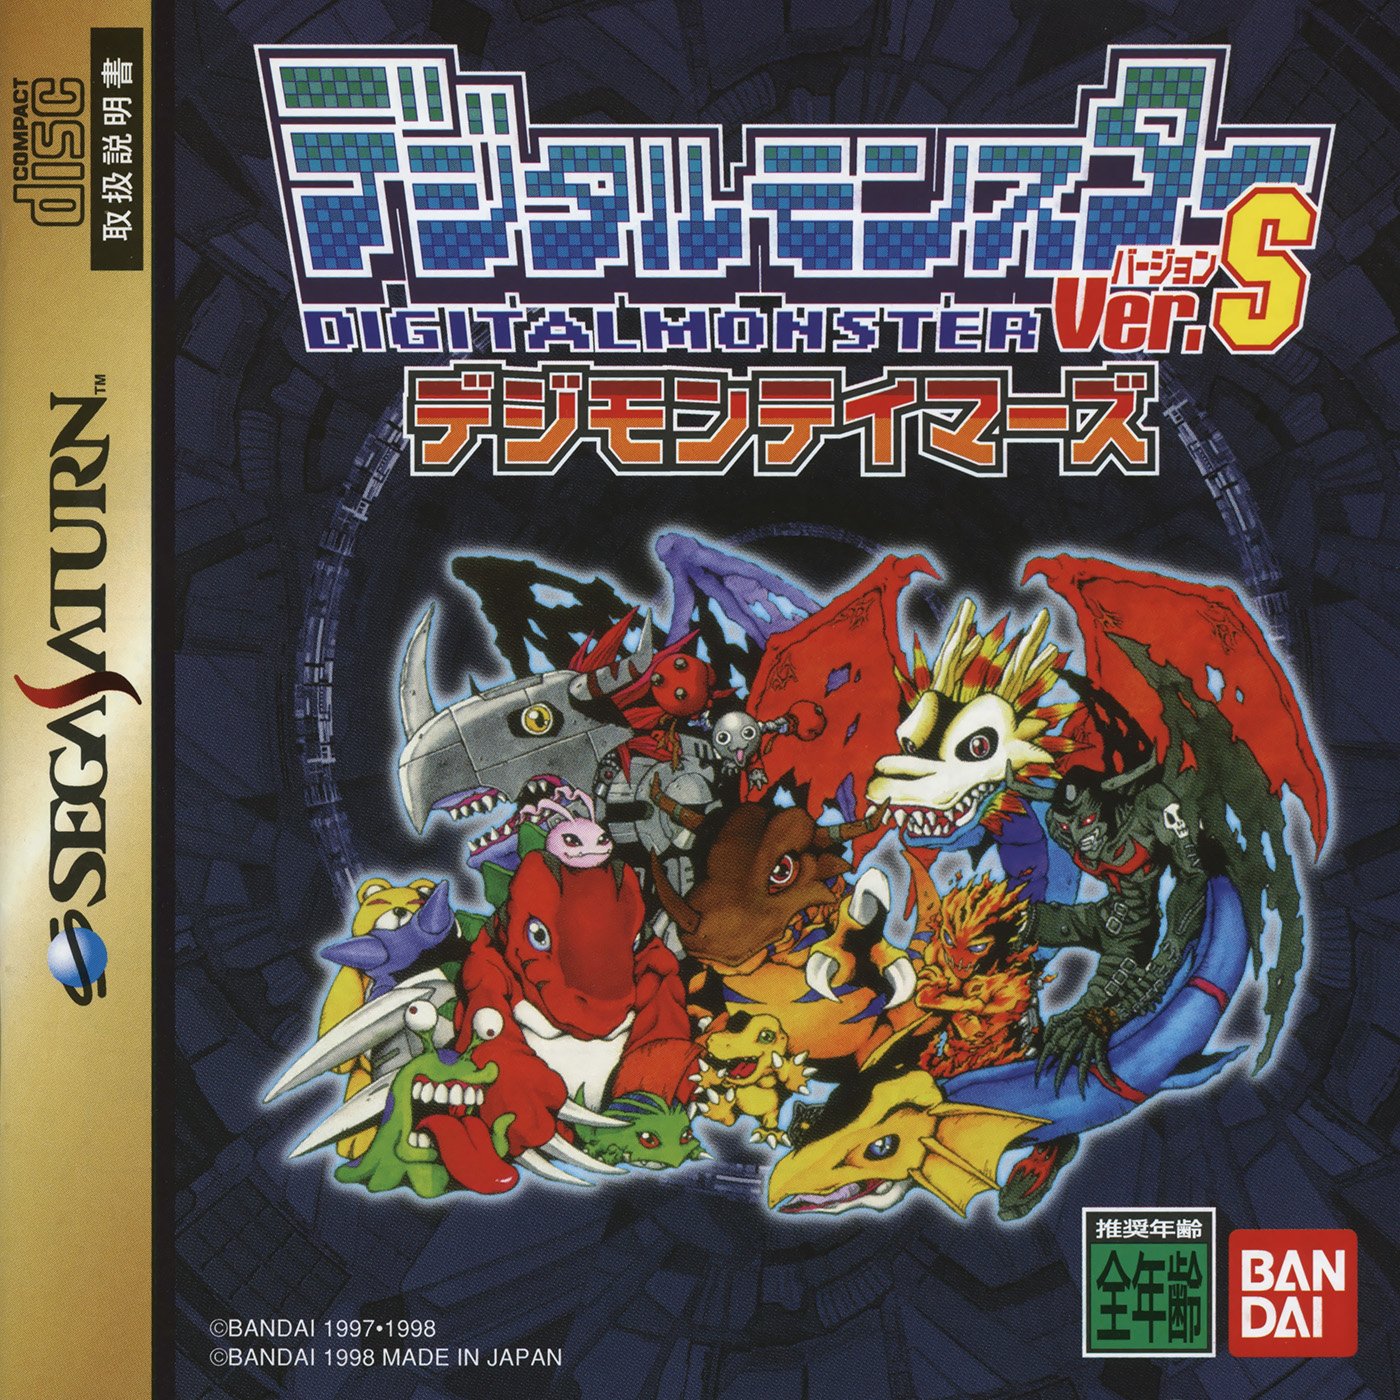 Digital Monster Ver. S Digimon Tamers